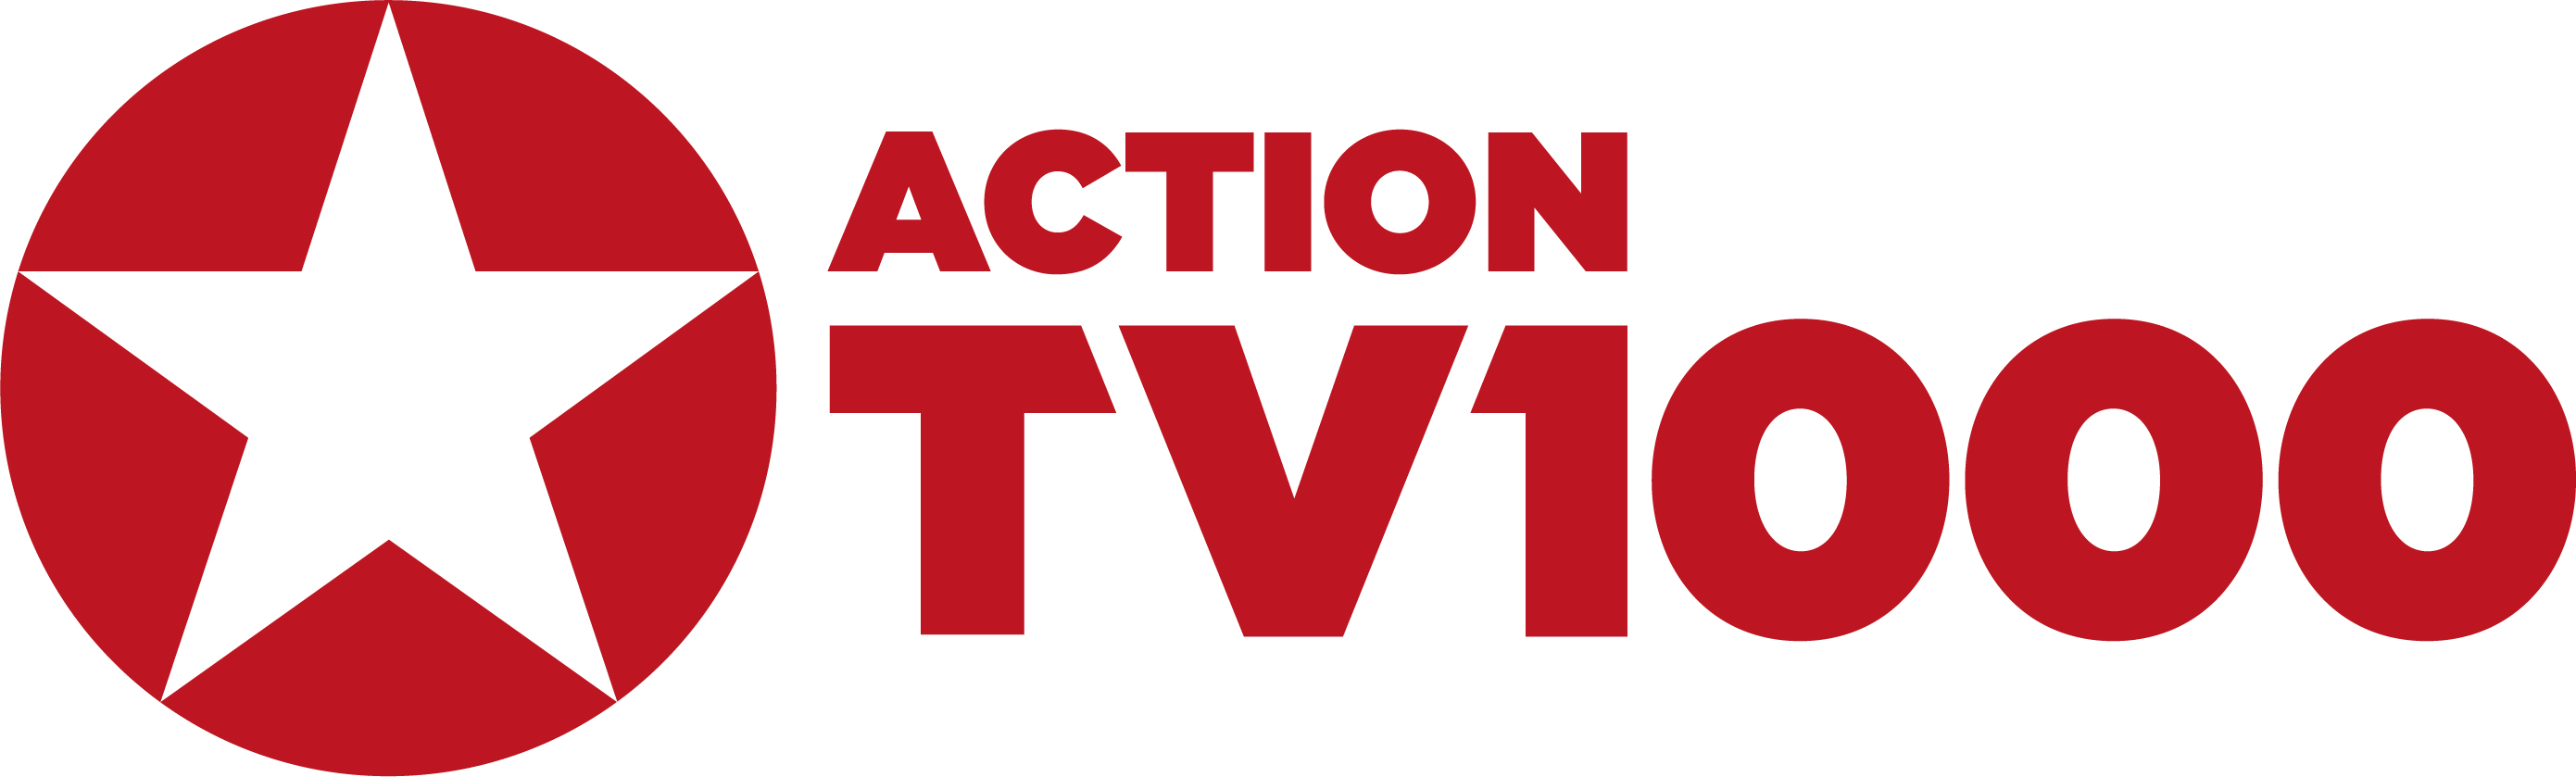 Канал тв 1000 новелла программа. Tv1000. Tv1000 Action. Телеканал tv1000 Action. Логотип телеканала tv1000 Action.